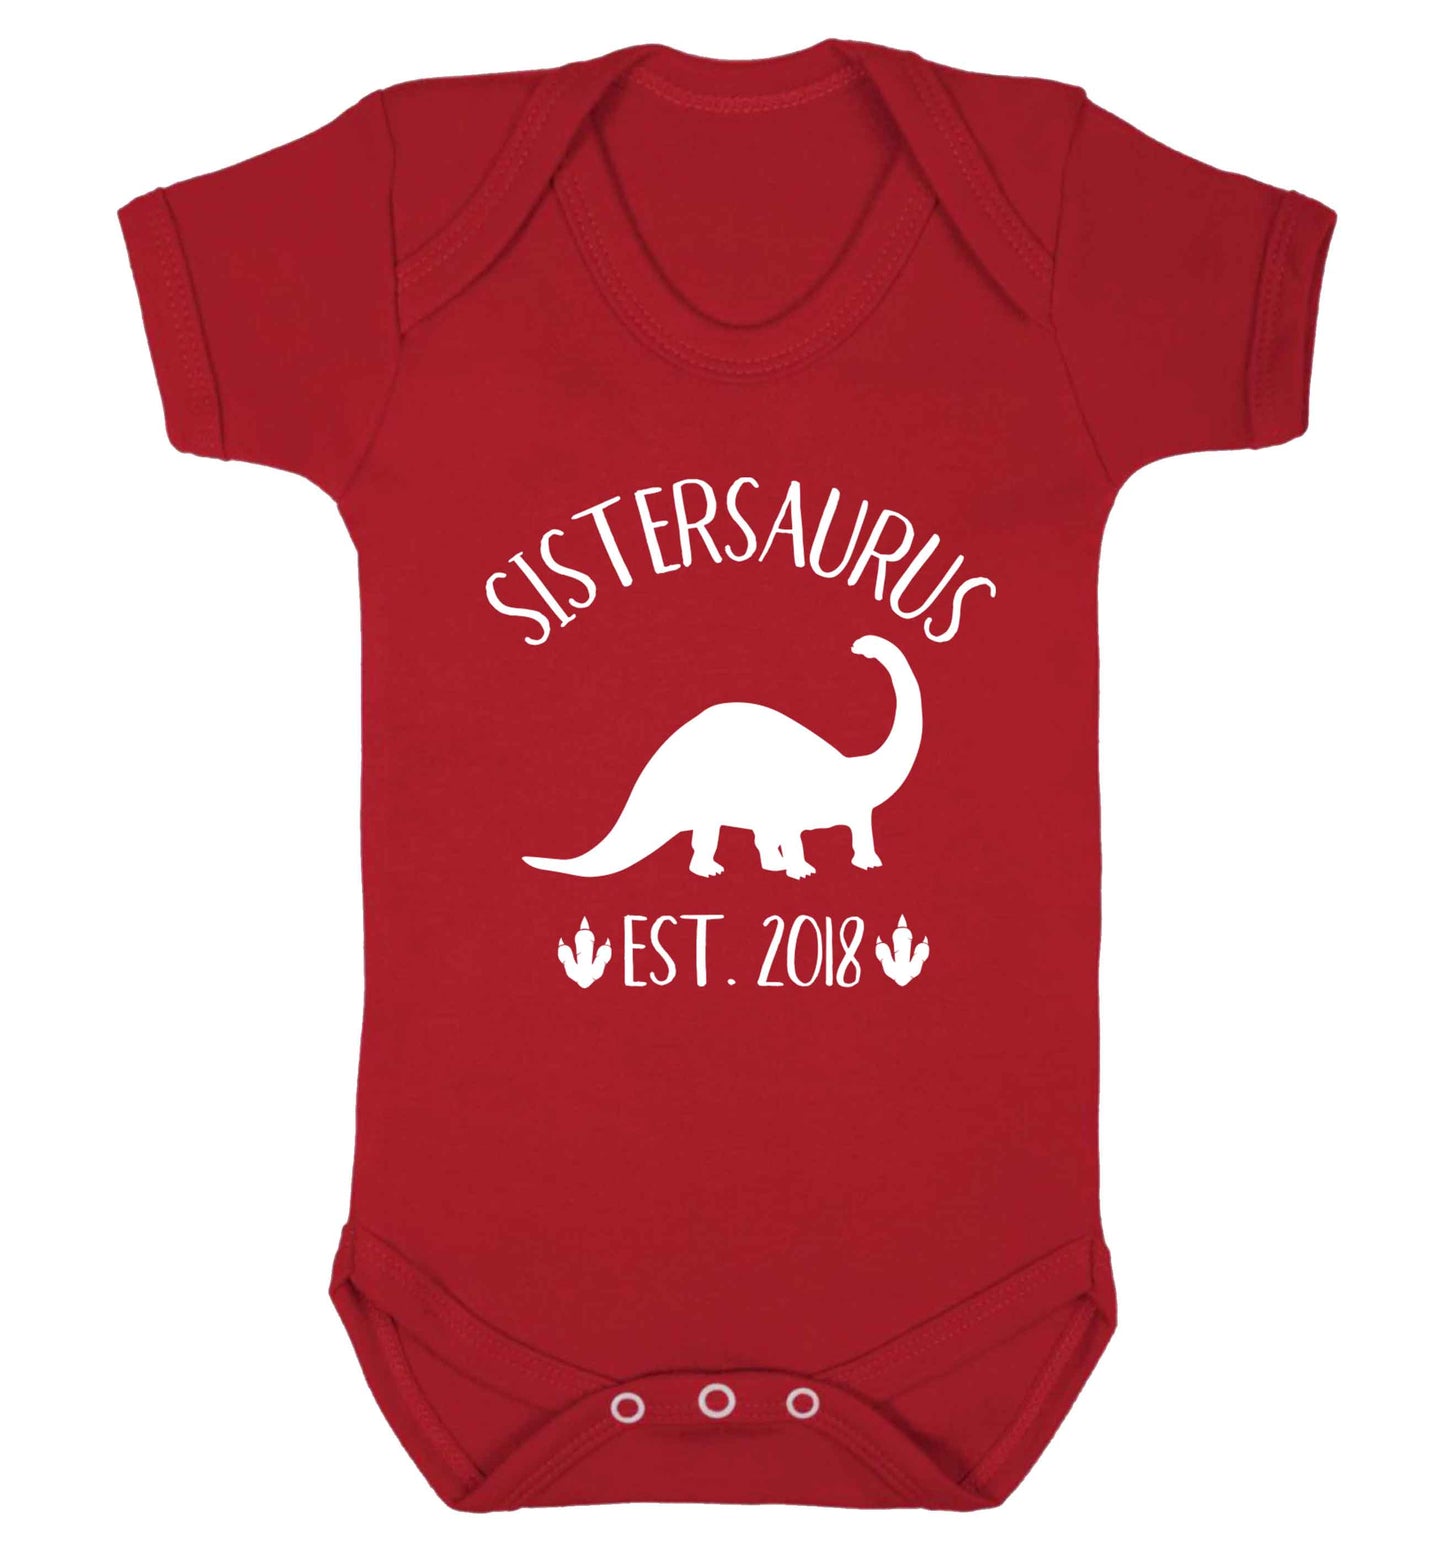 Personalised sistersaurus since (custom date) Baby Vest red 18-24 months